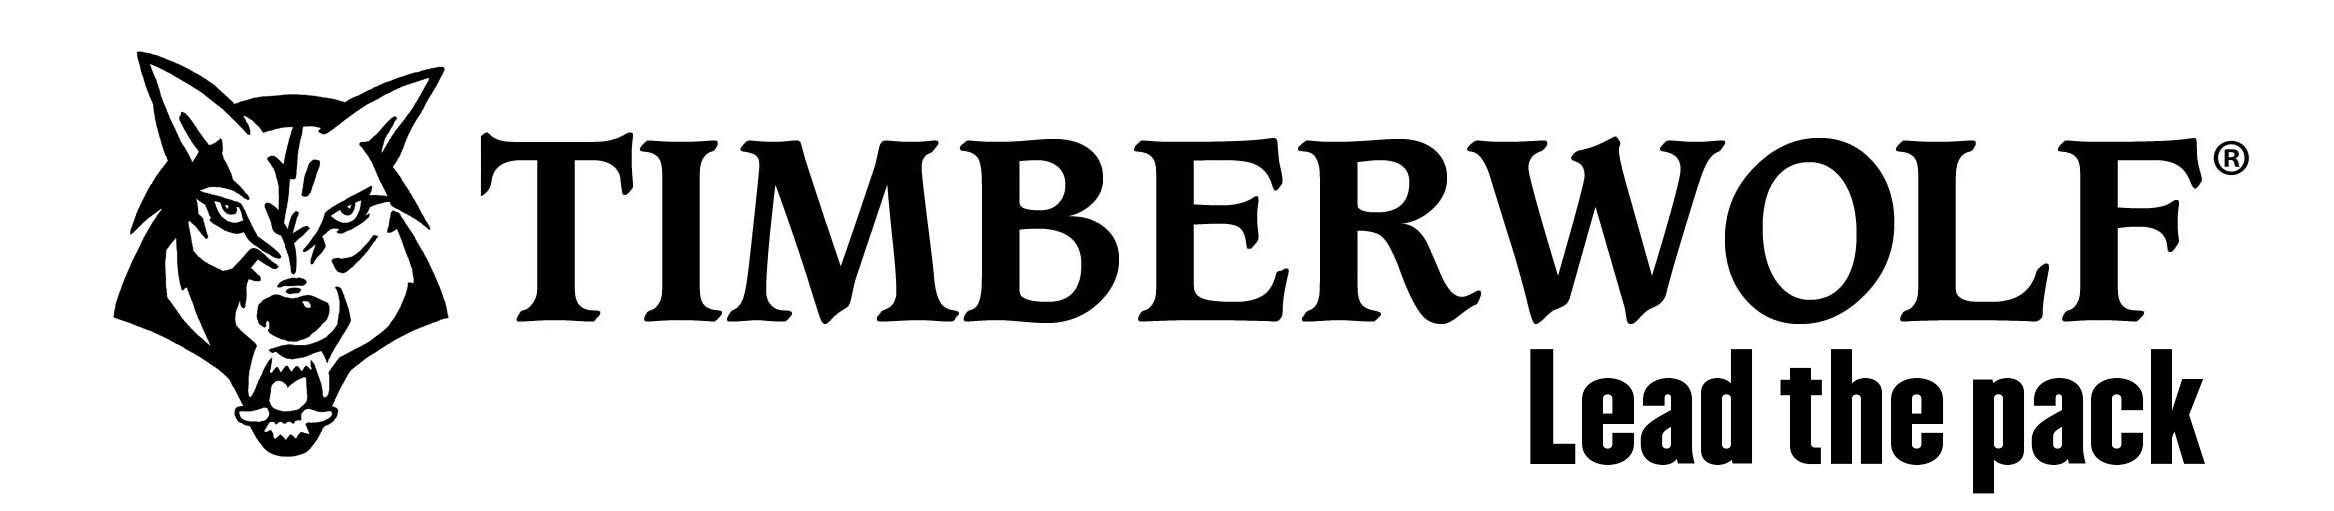 Timberwolf Logo - Timberwolf